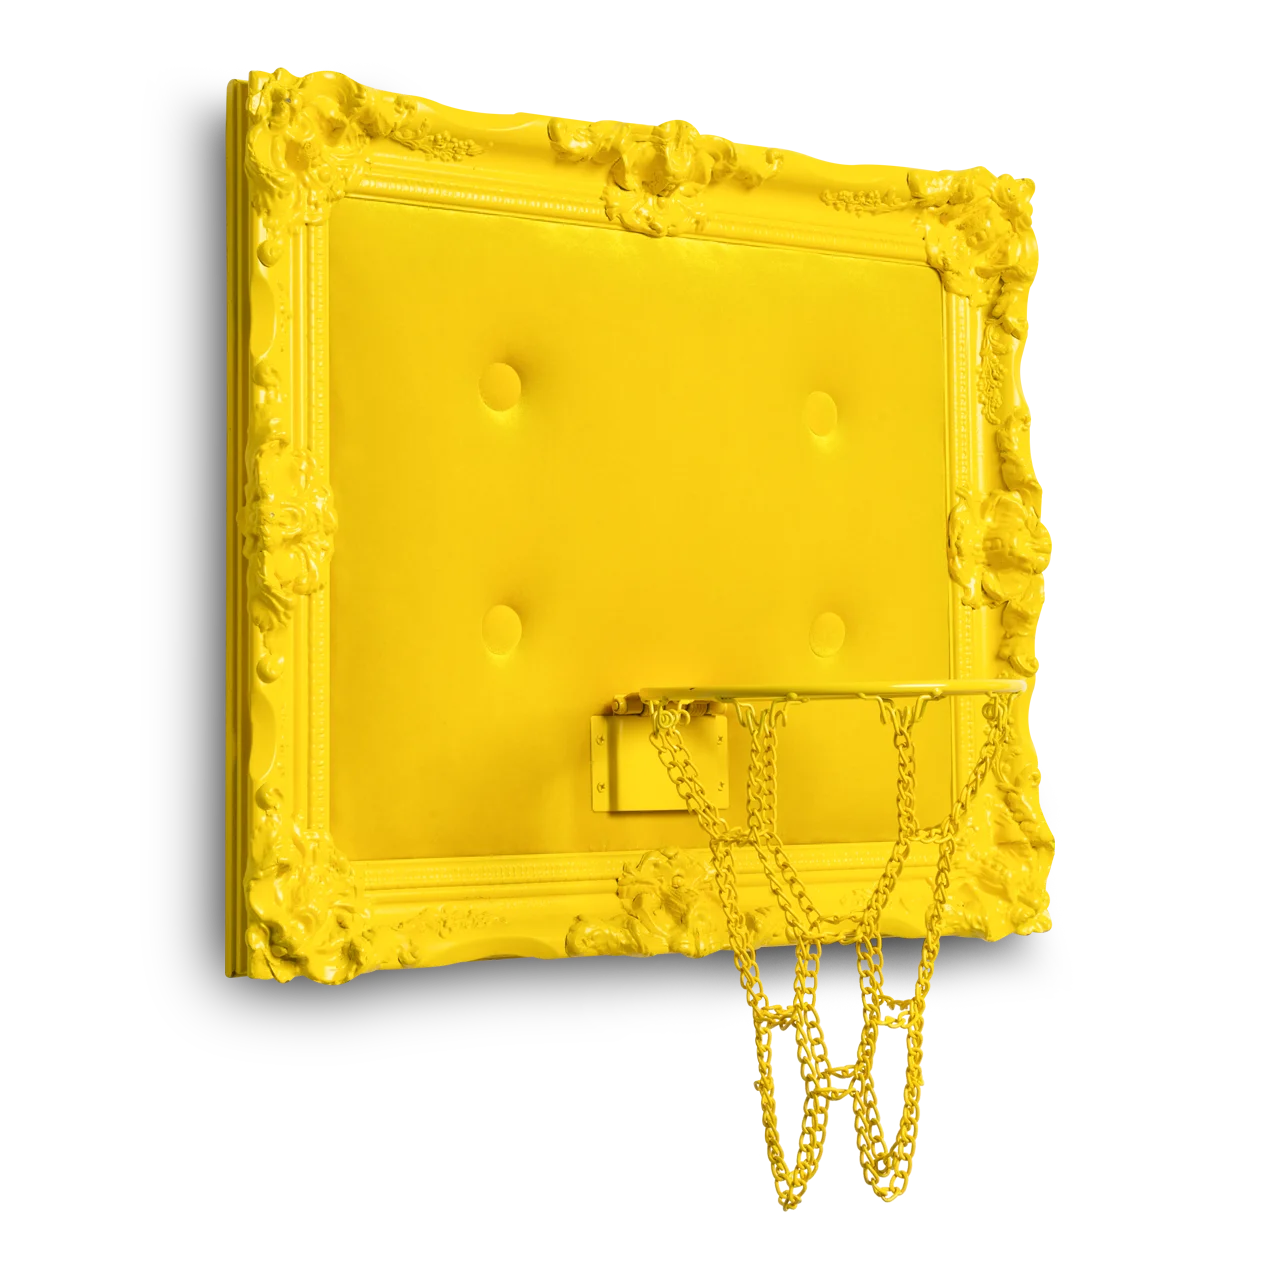 A vibrant yellow hoop made of luxurious velvet.